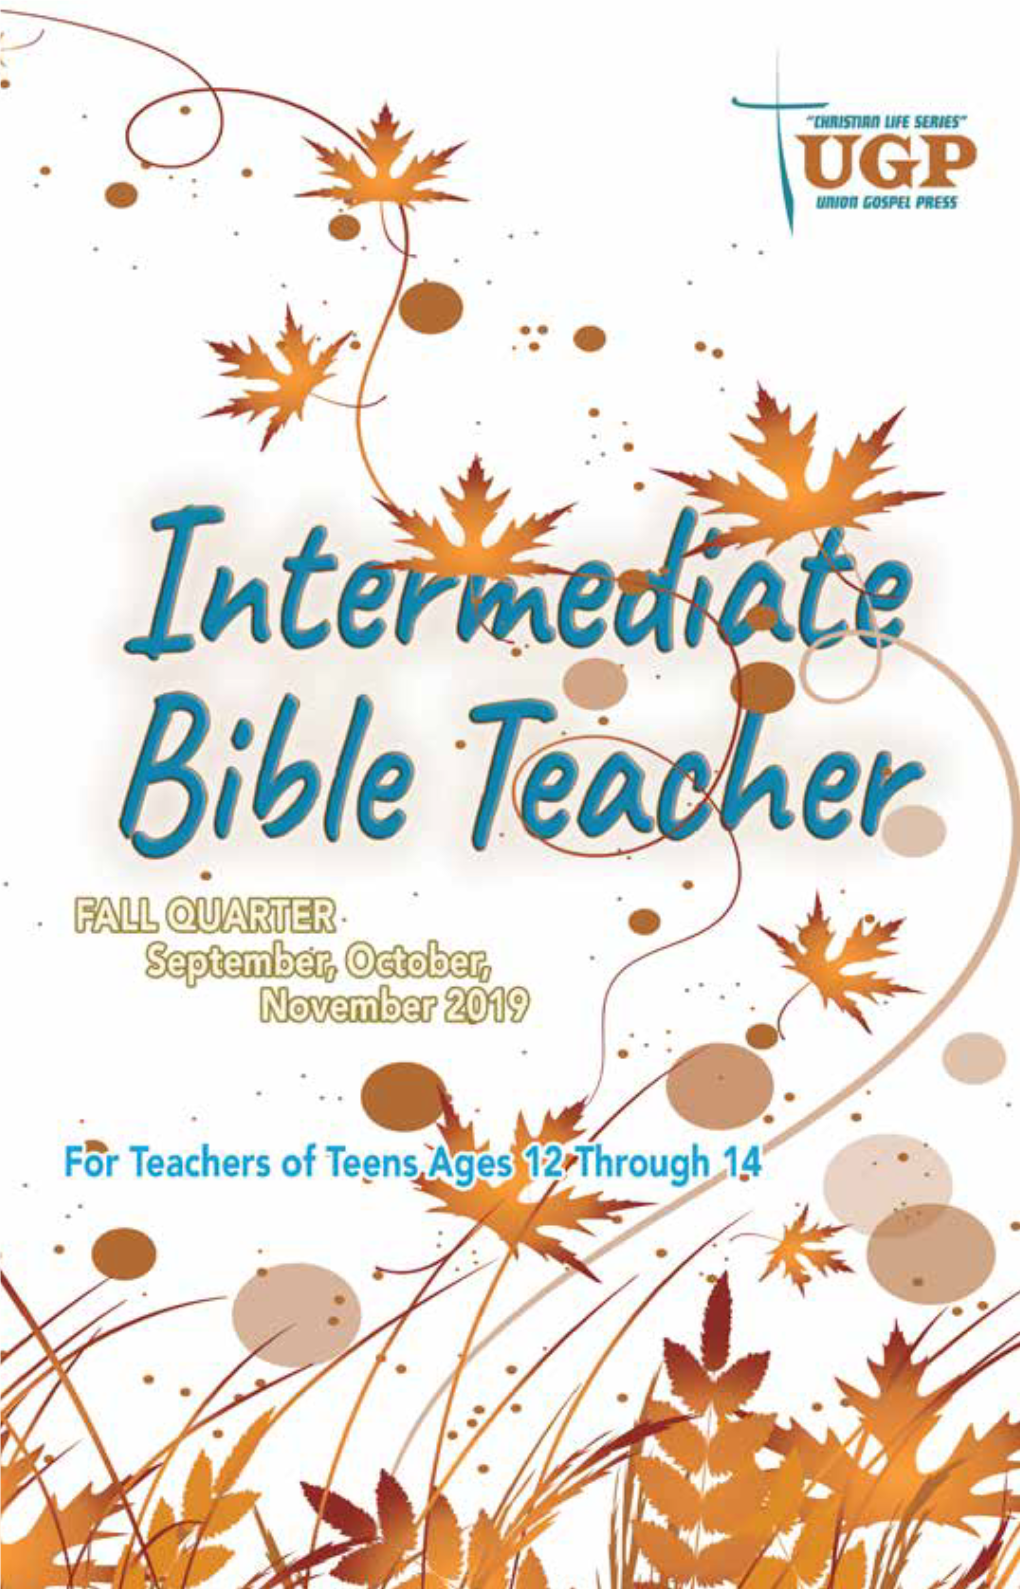 Intermediate Bible Teacher FALL QUARTER September, October, November 2019